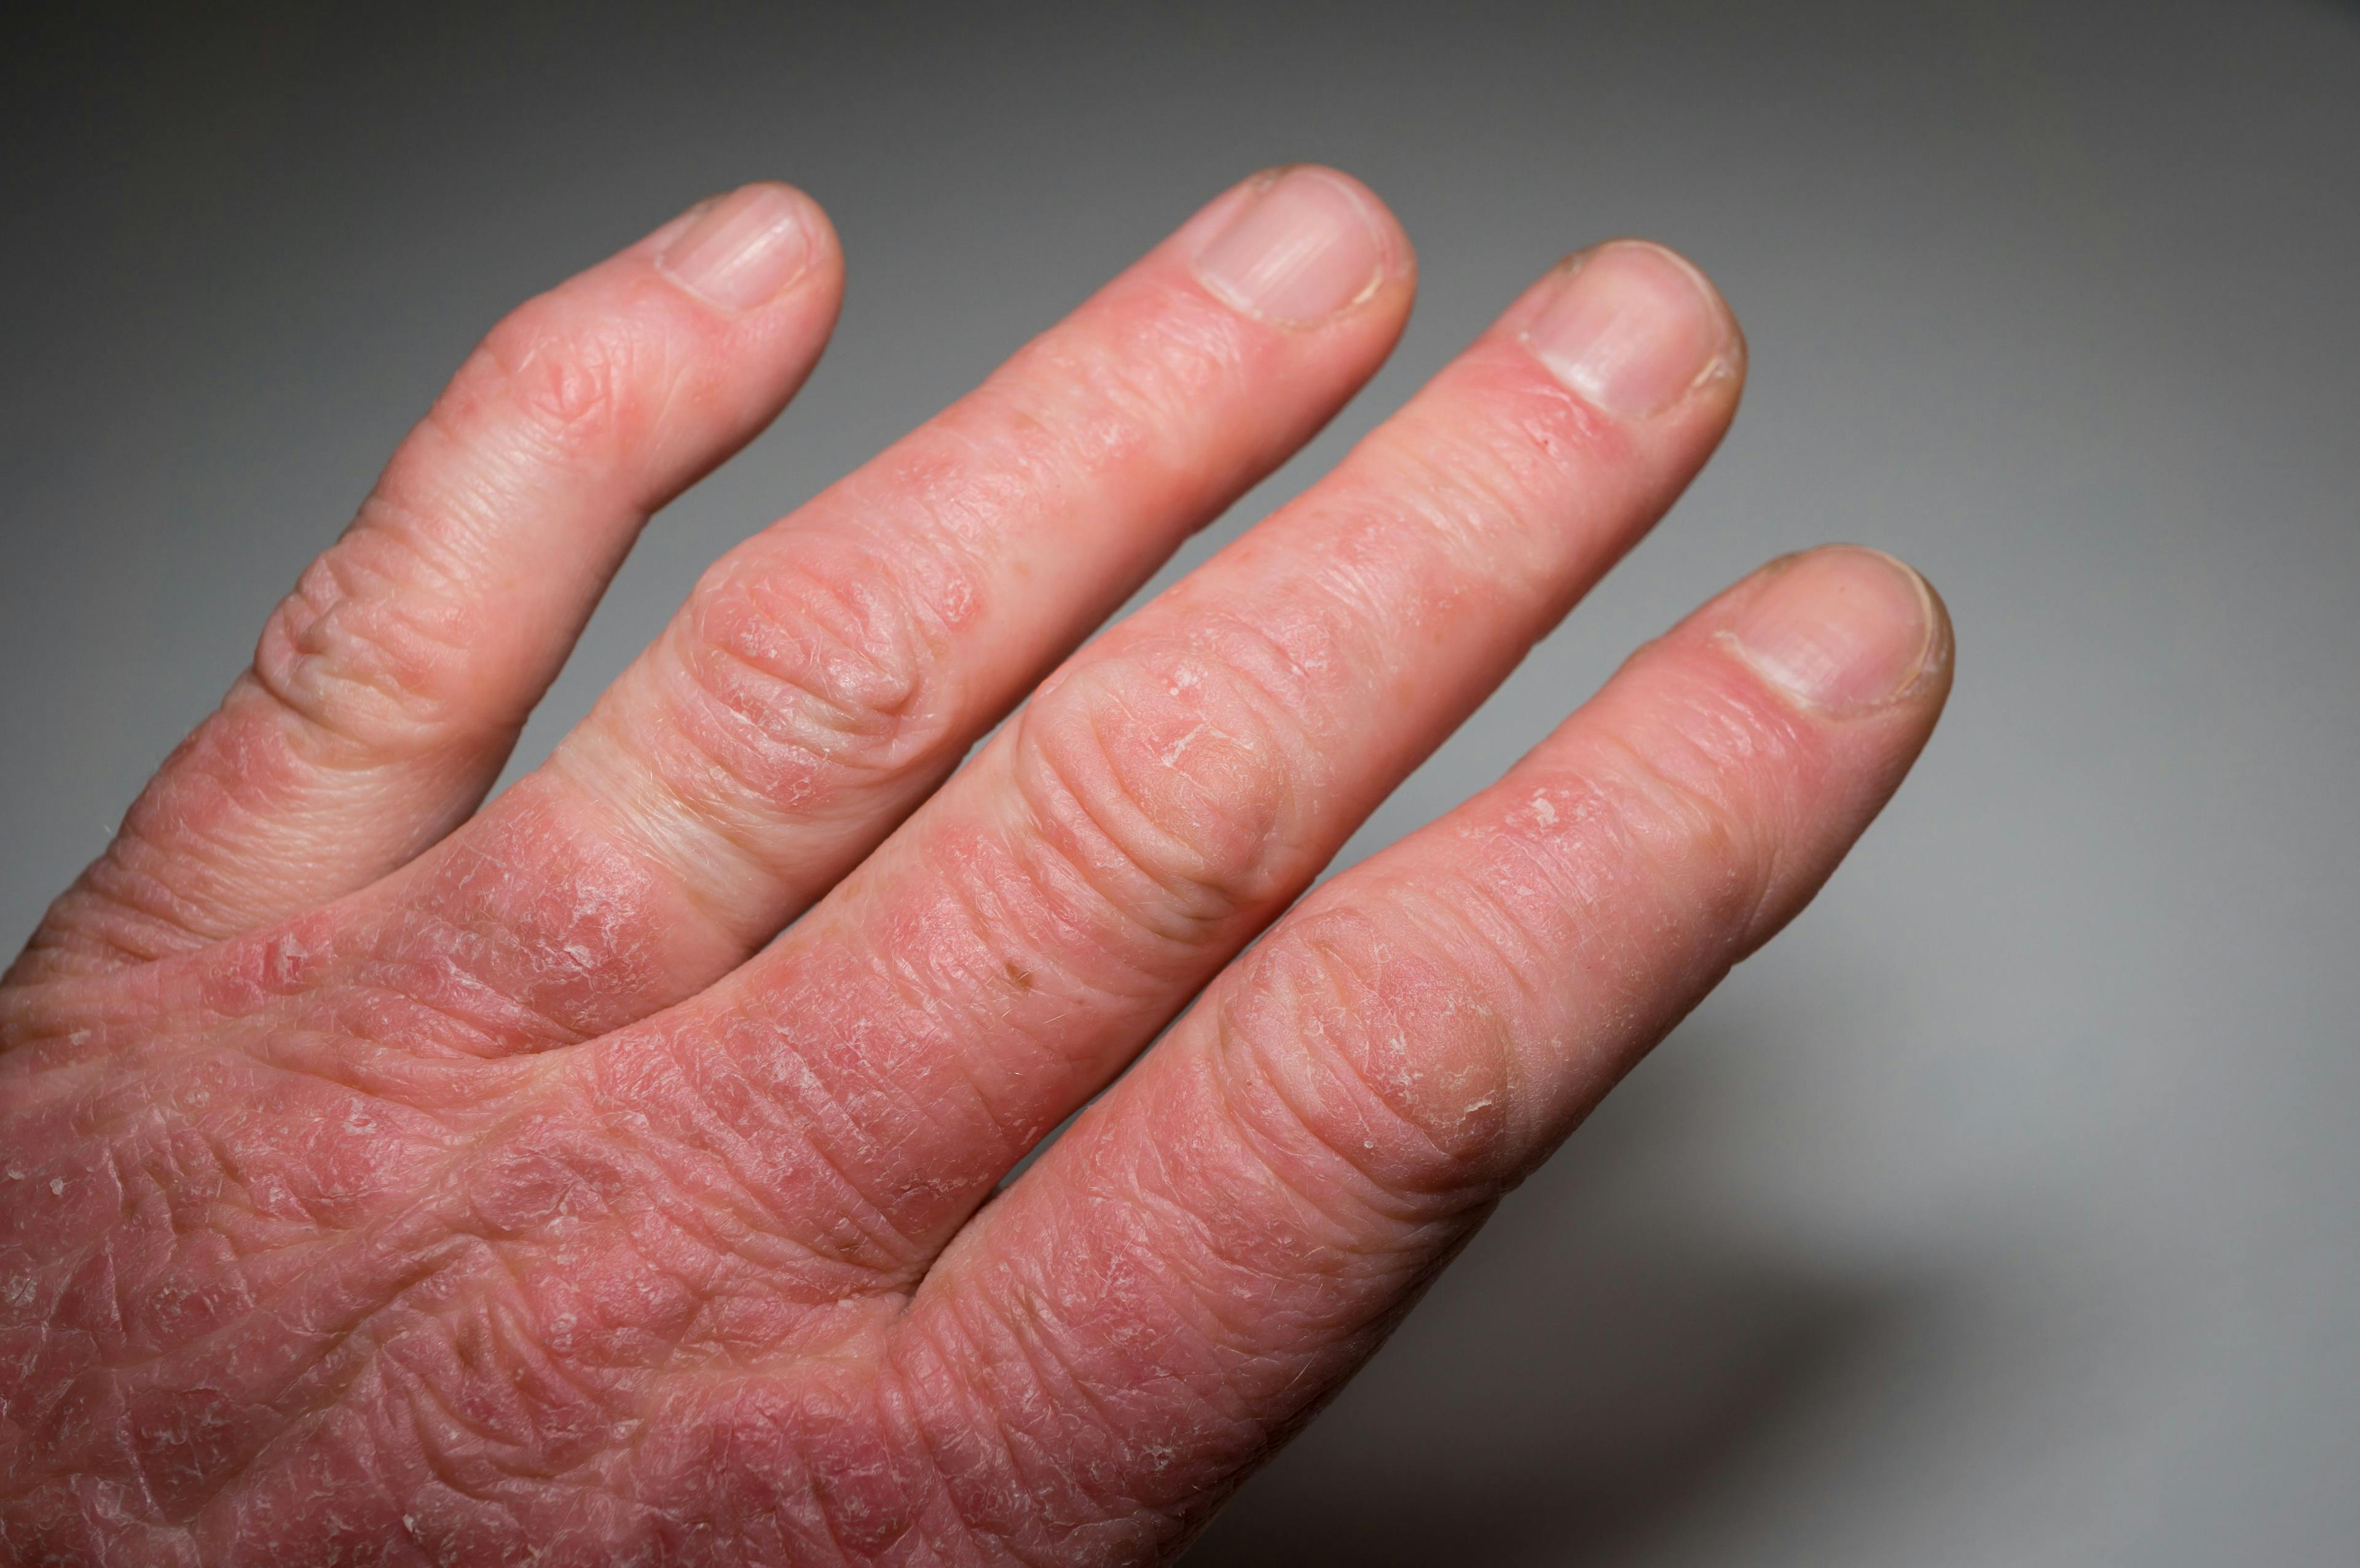 Hand with psoriatic arthritis